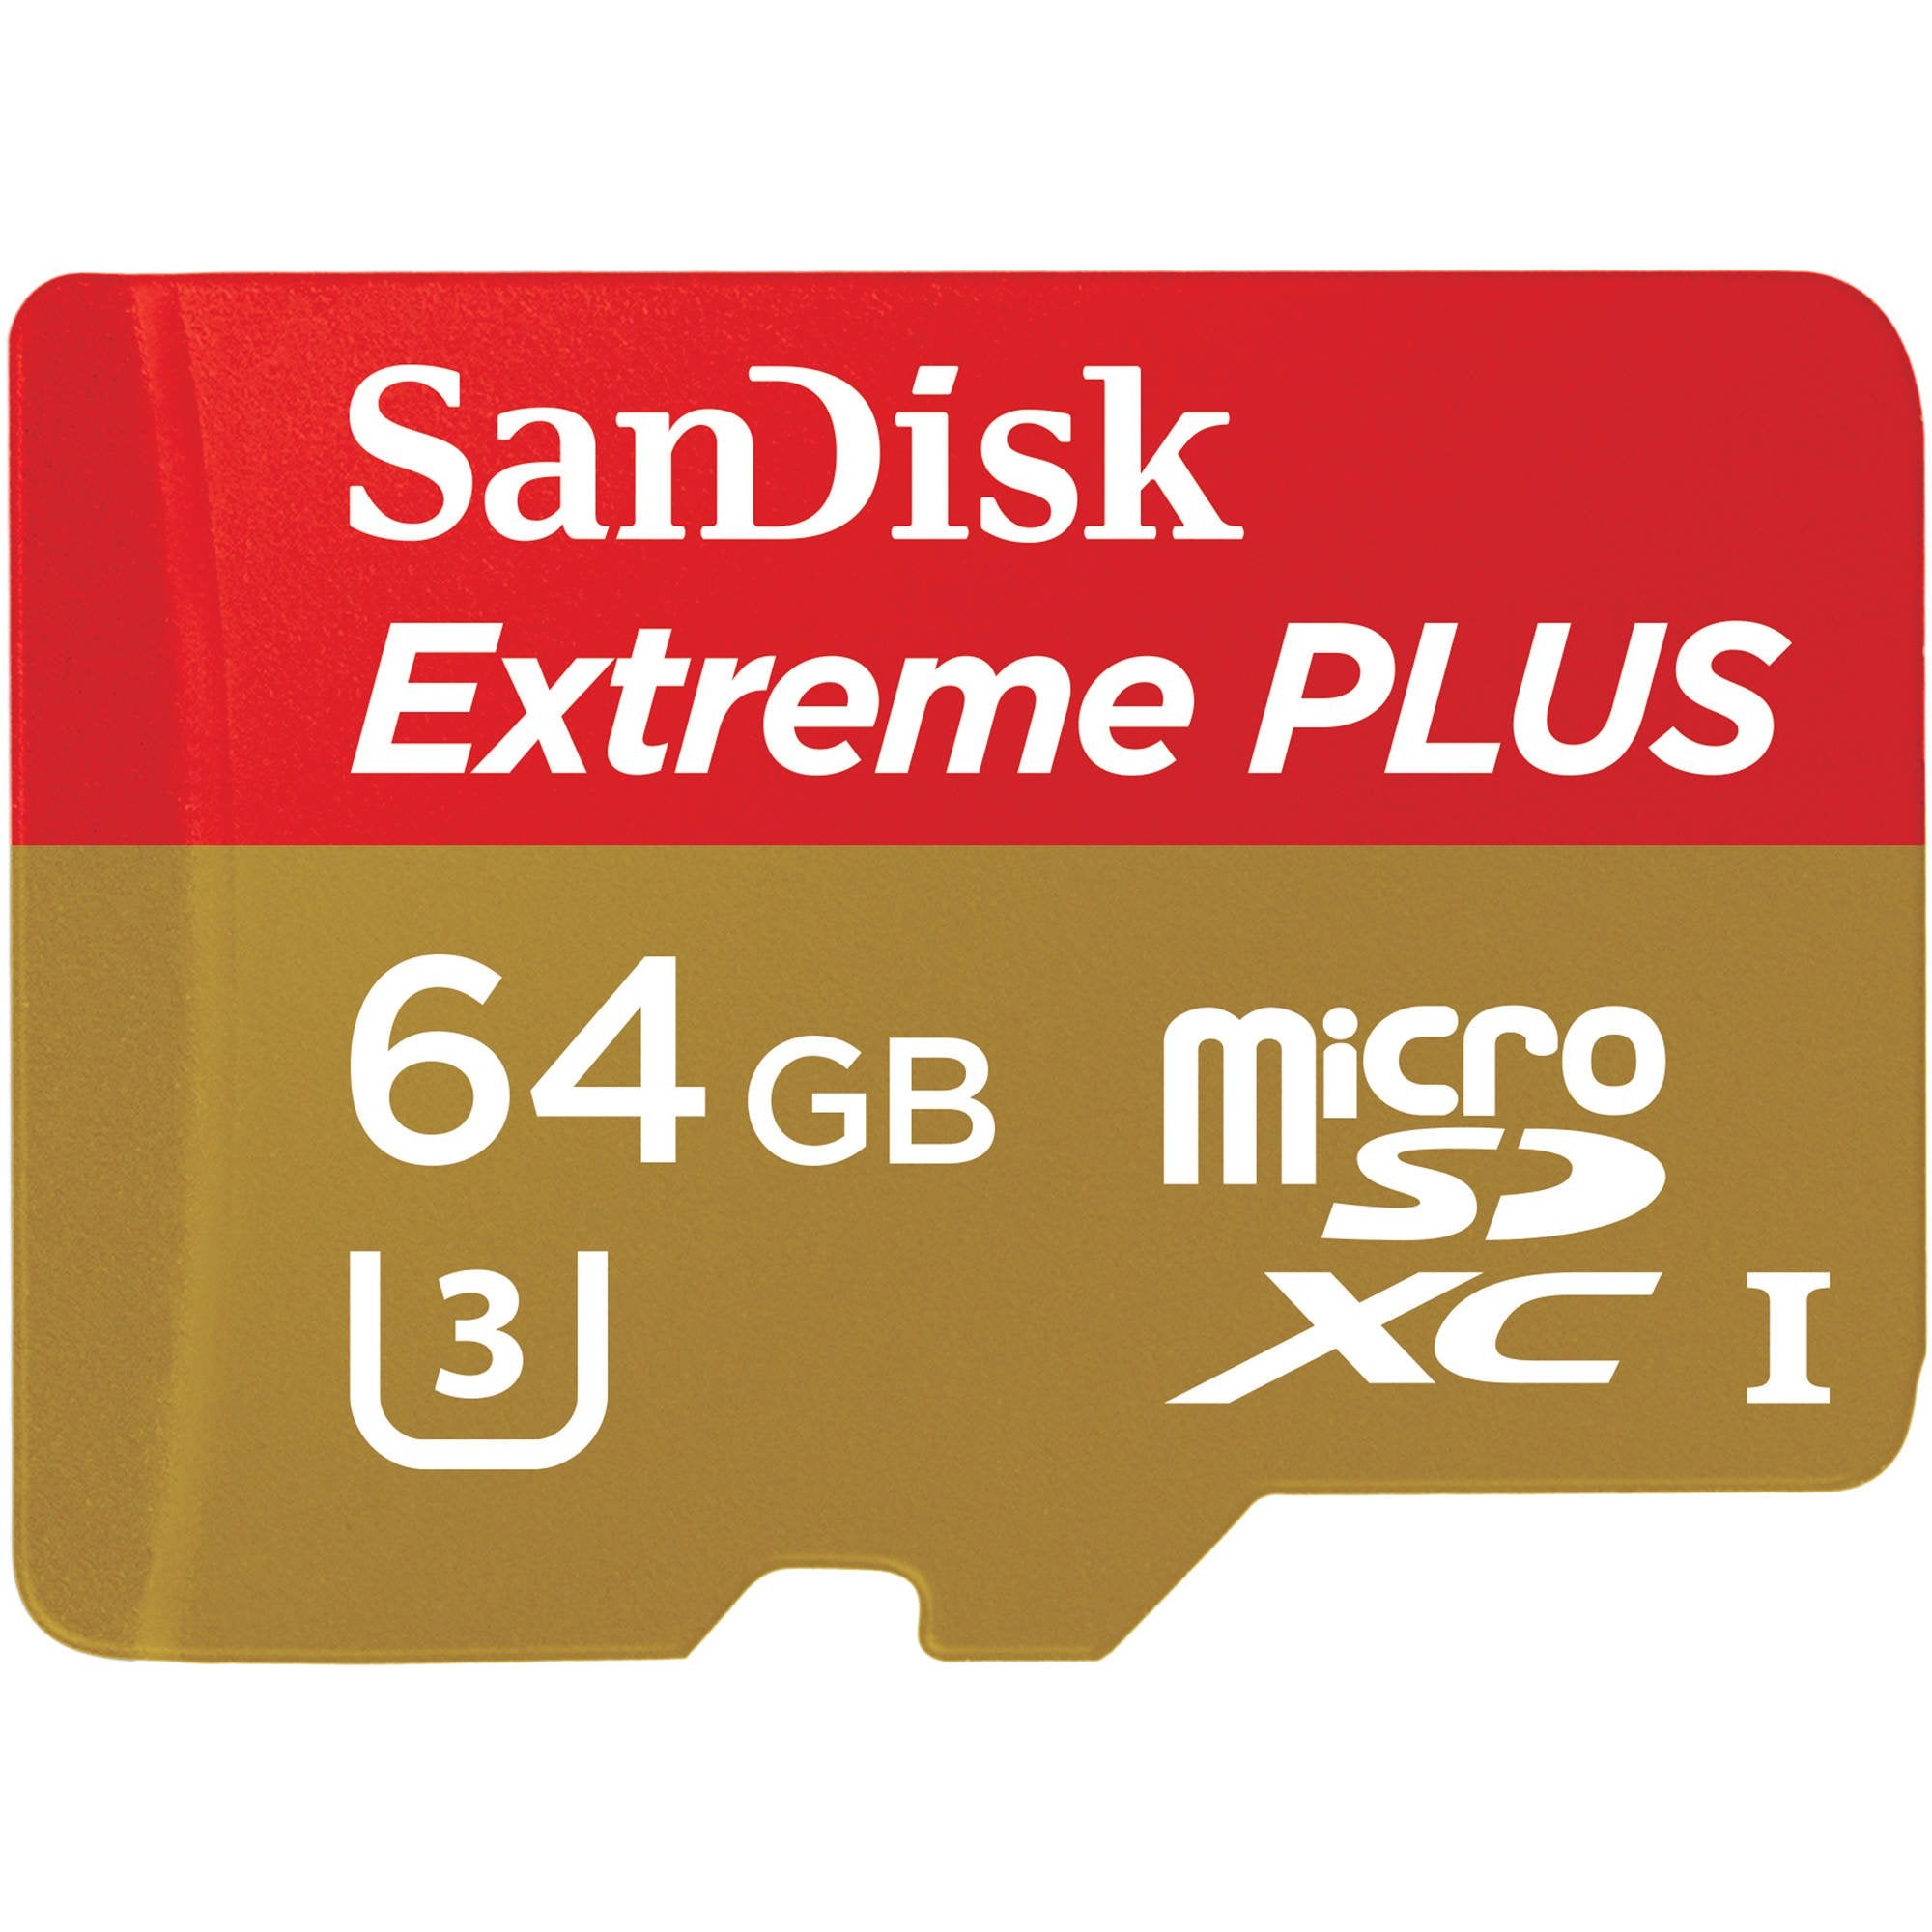 Sandisk Extreme PLUS - Flash Memory Card - 64 GB - MicroSDXC UHS-I, Gold/Red (SDSQXSG-064G-ANCMA)